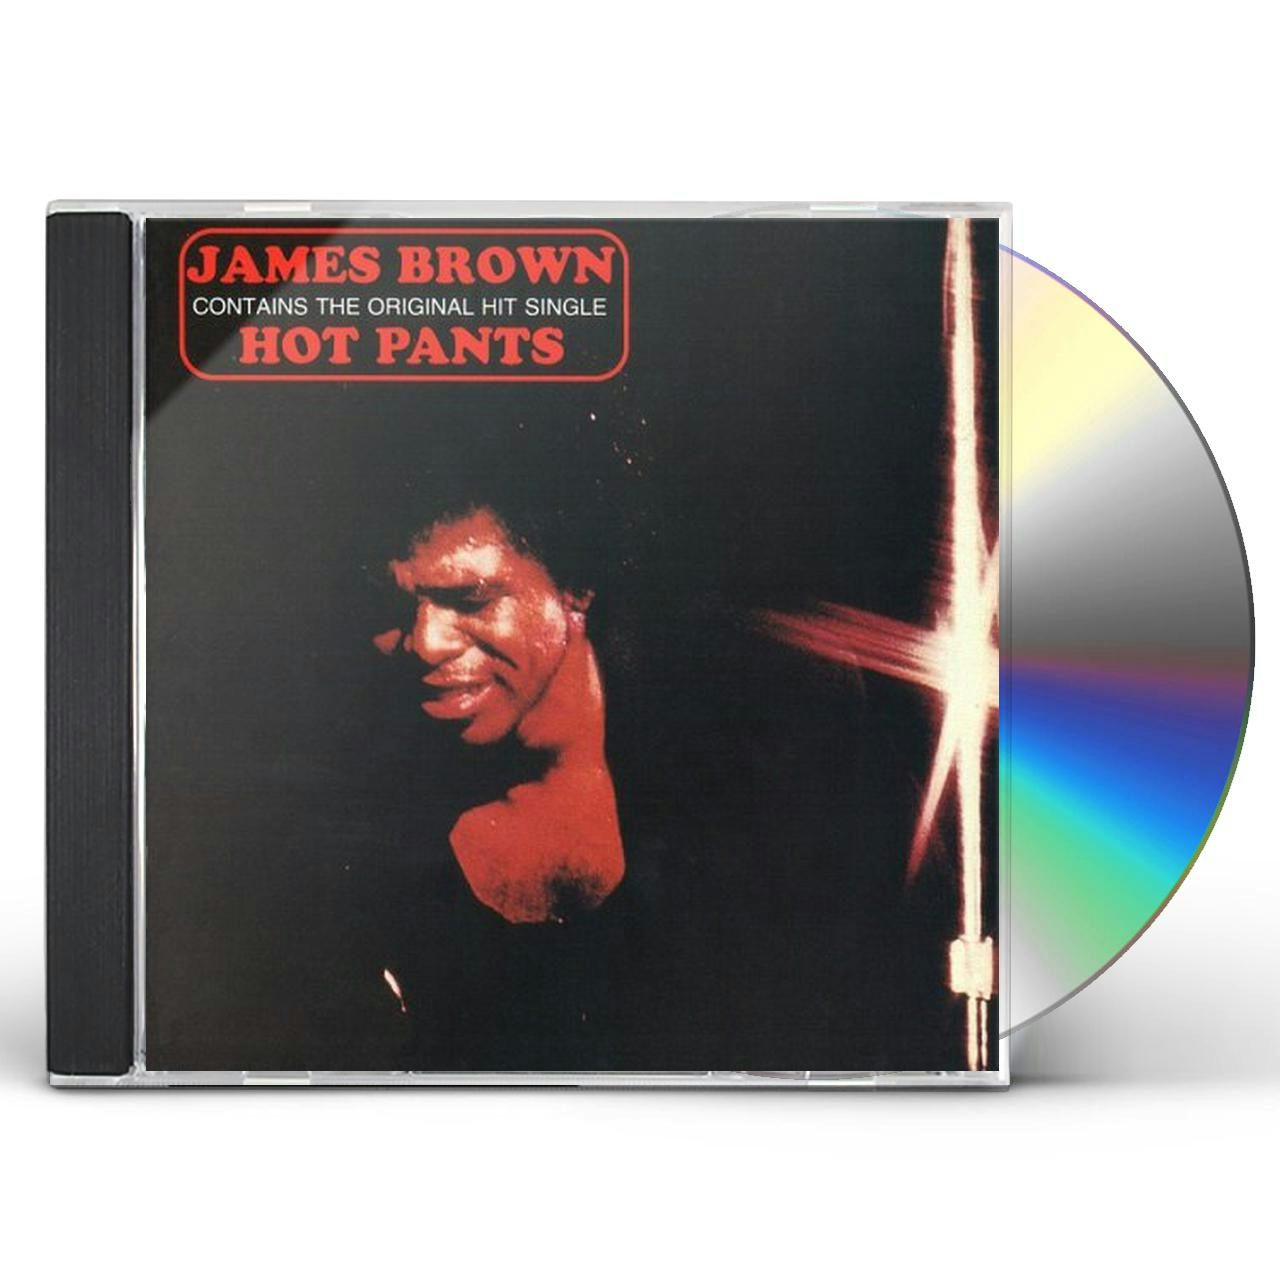 James Brown - hot pants cd